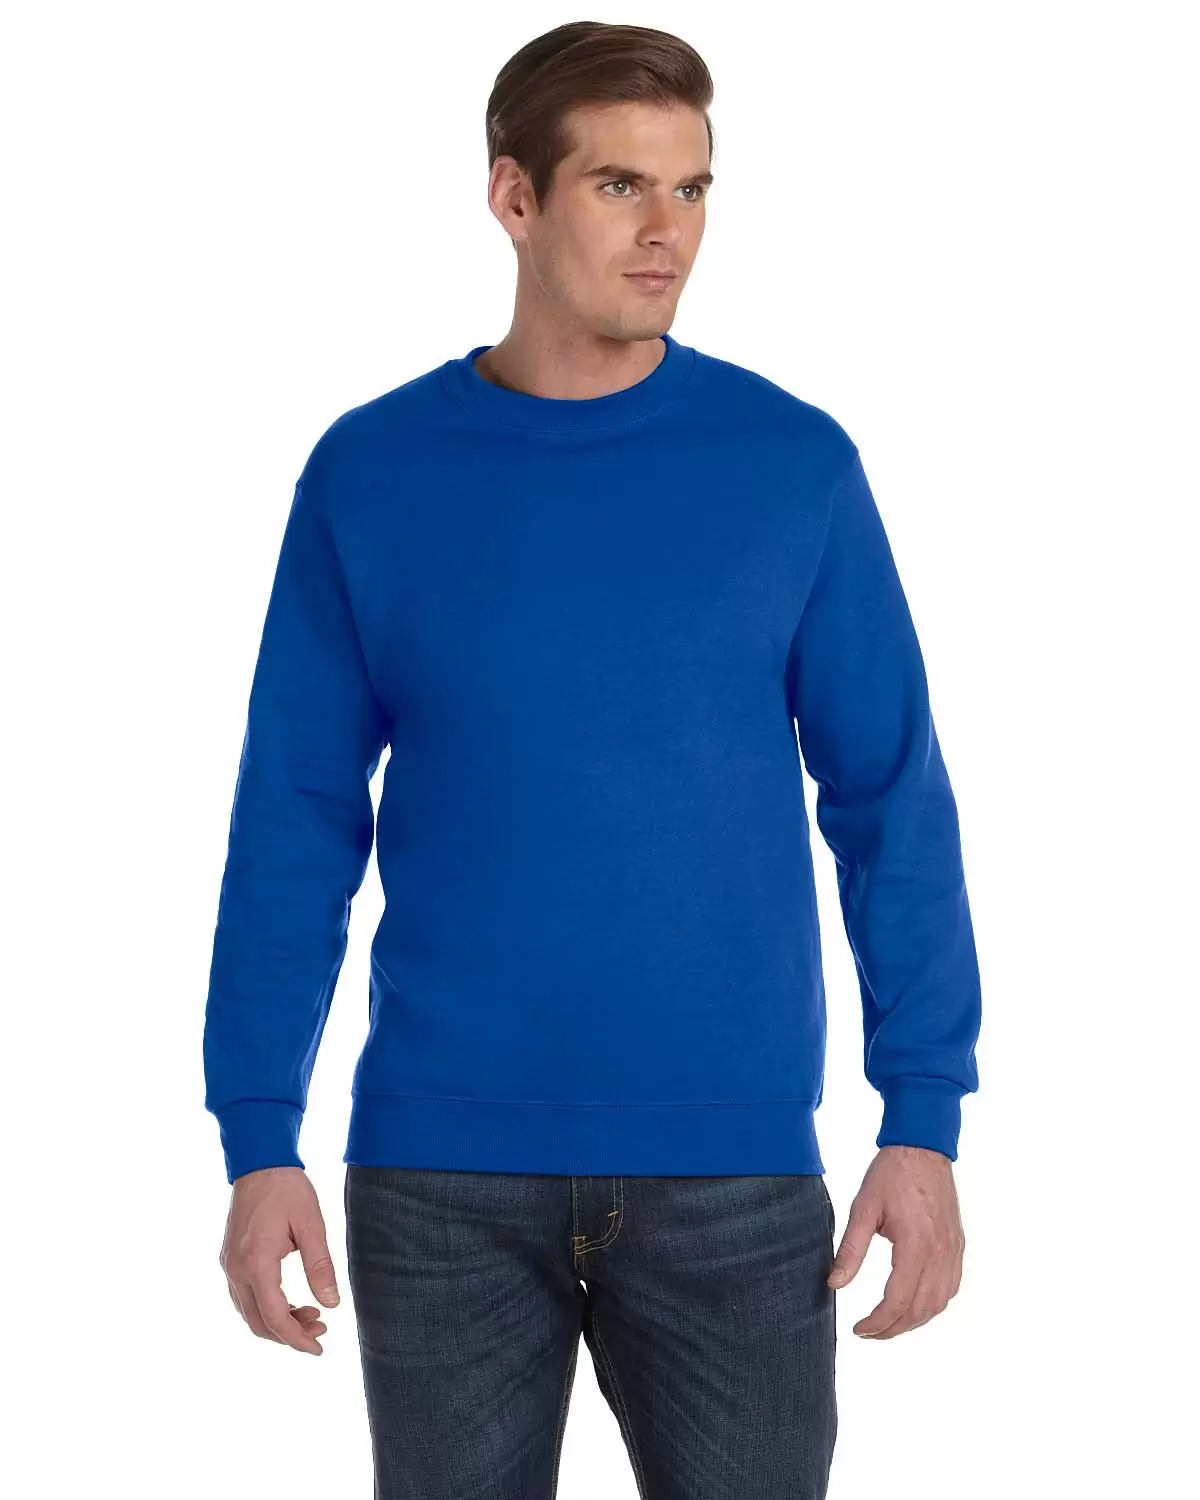 Gildan 1200 DryBlend Crew Neck Sweatshirt - From $8.96